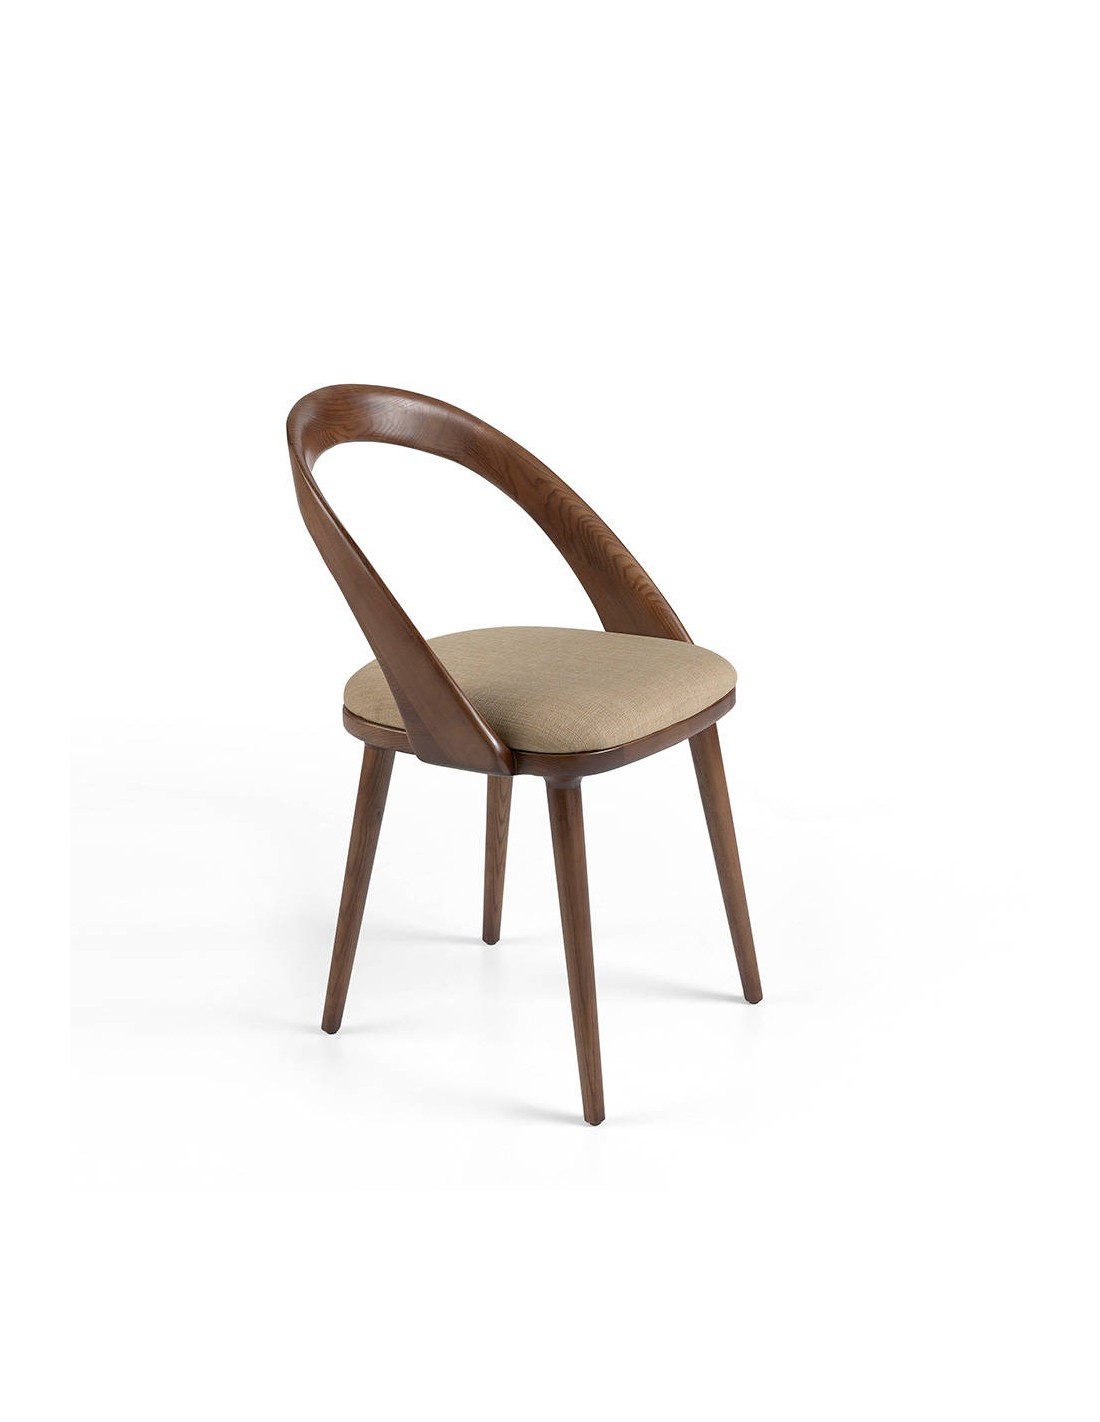 Стул ch. Стул Angel Cerda ch1483. Современные стулья. Стул обеденный деревянный. Современные стулья для кухни деревянные.